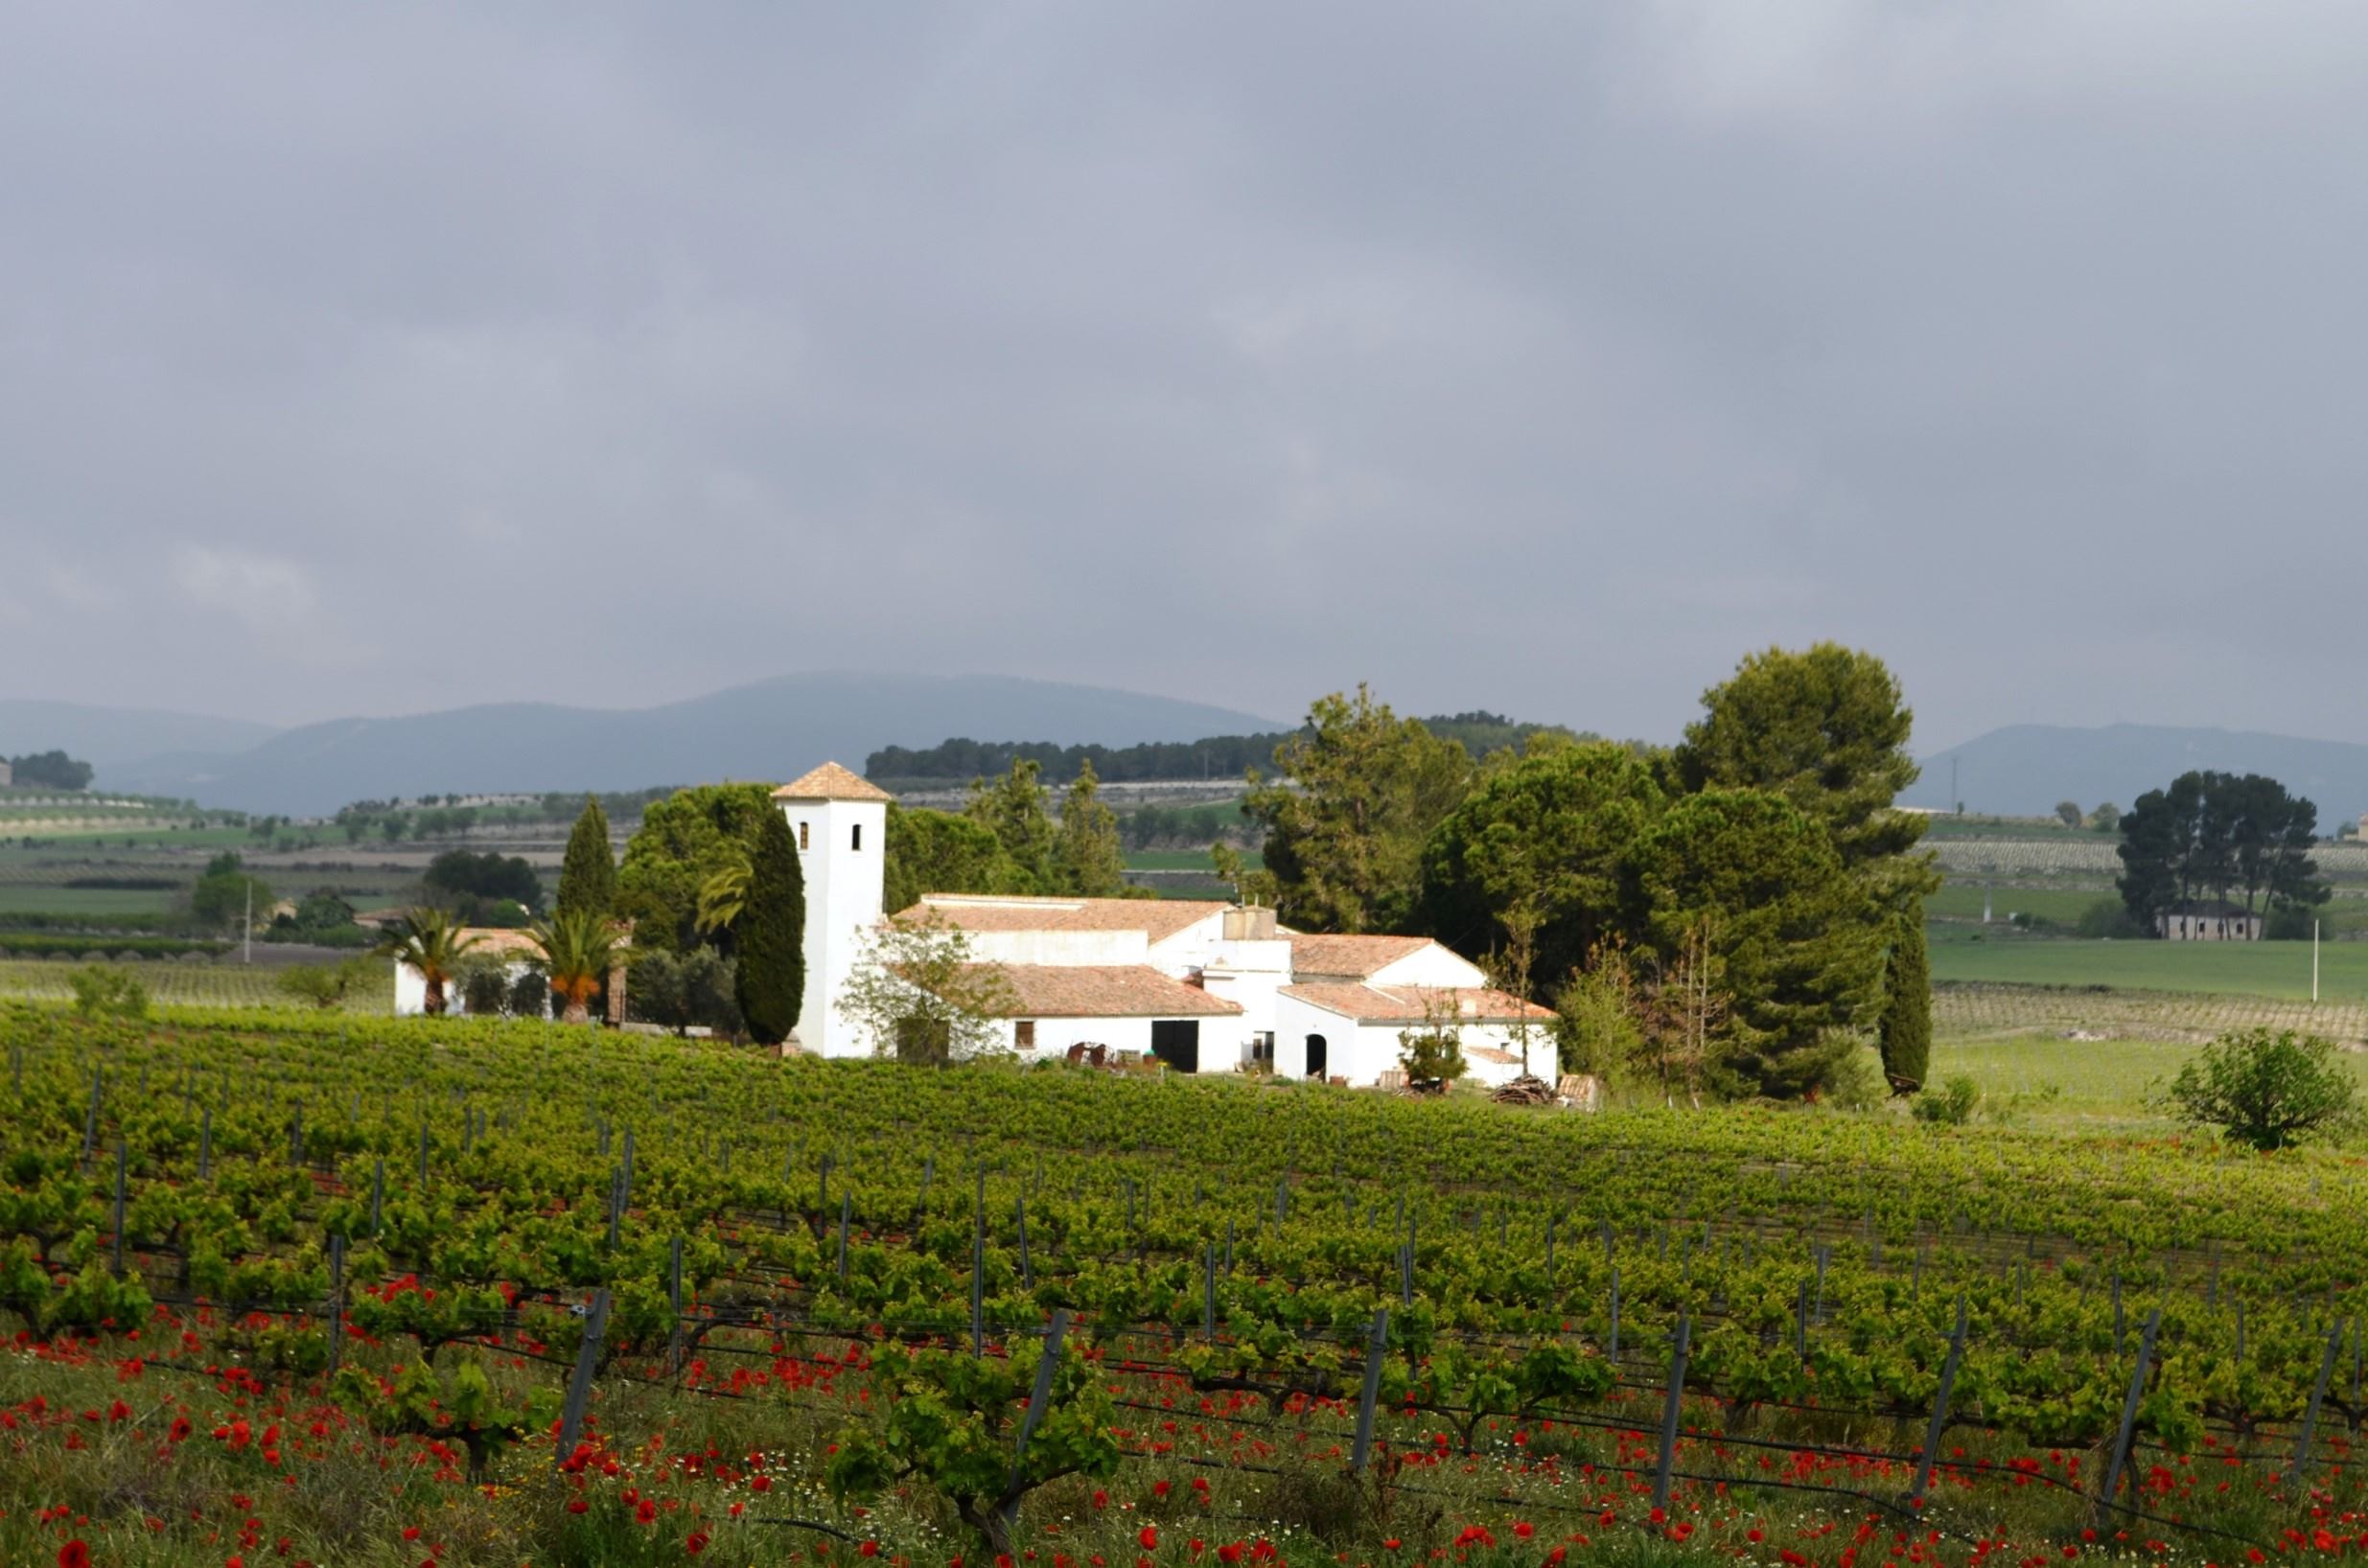 Vineyards in Terres dels Alforins.